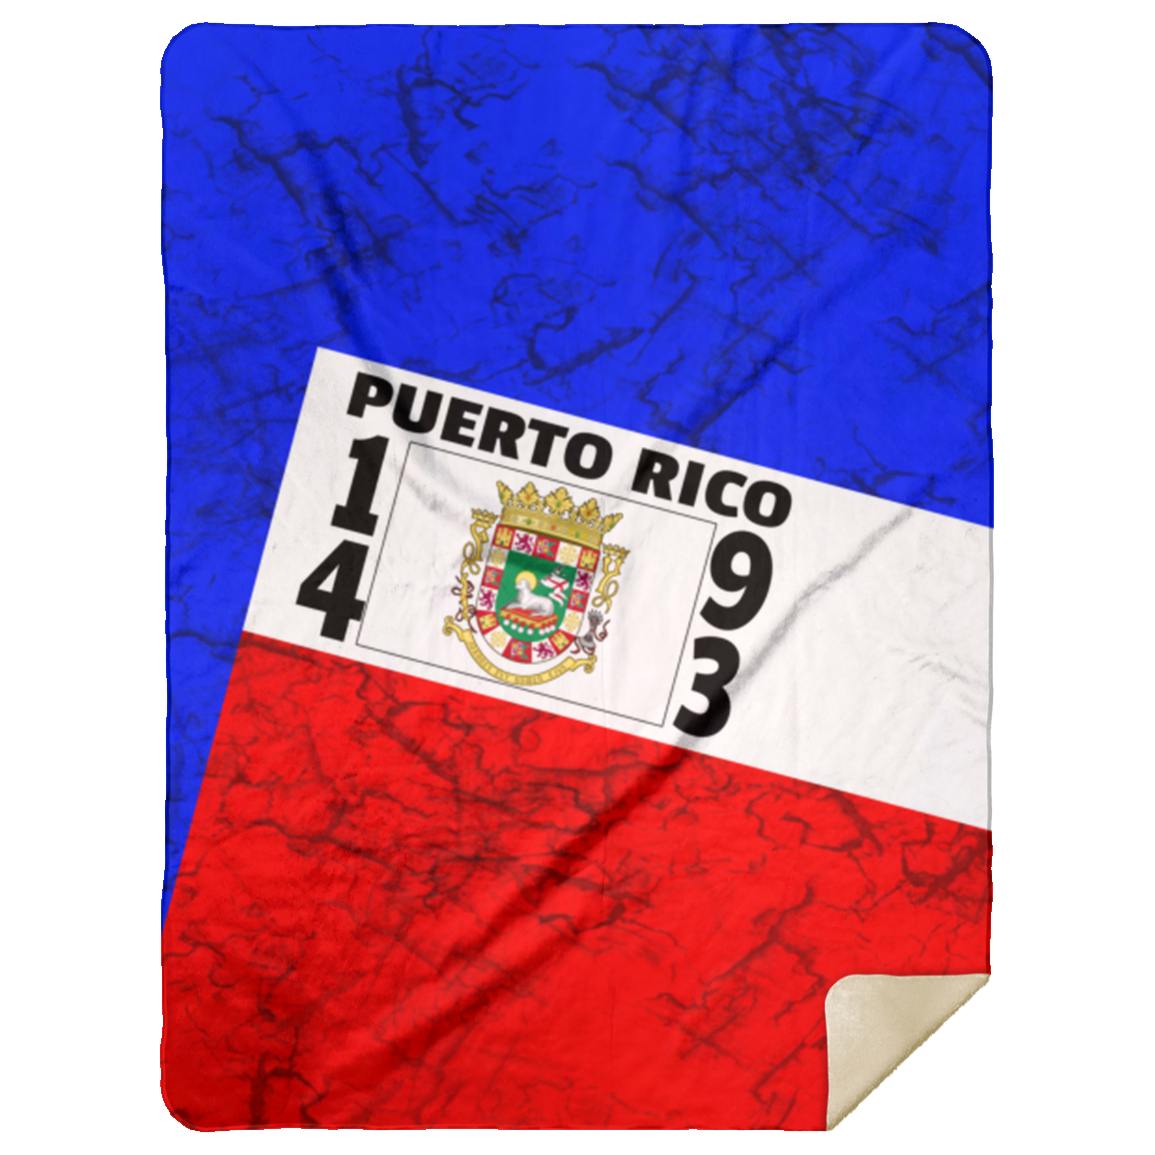 Coat Of Arms Premium Mink Sherpa Blanket 60x80 - Puerto Rican Pride